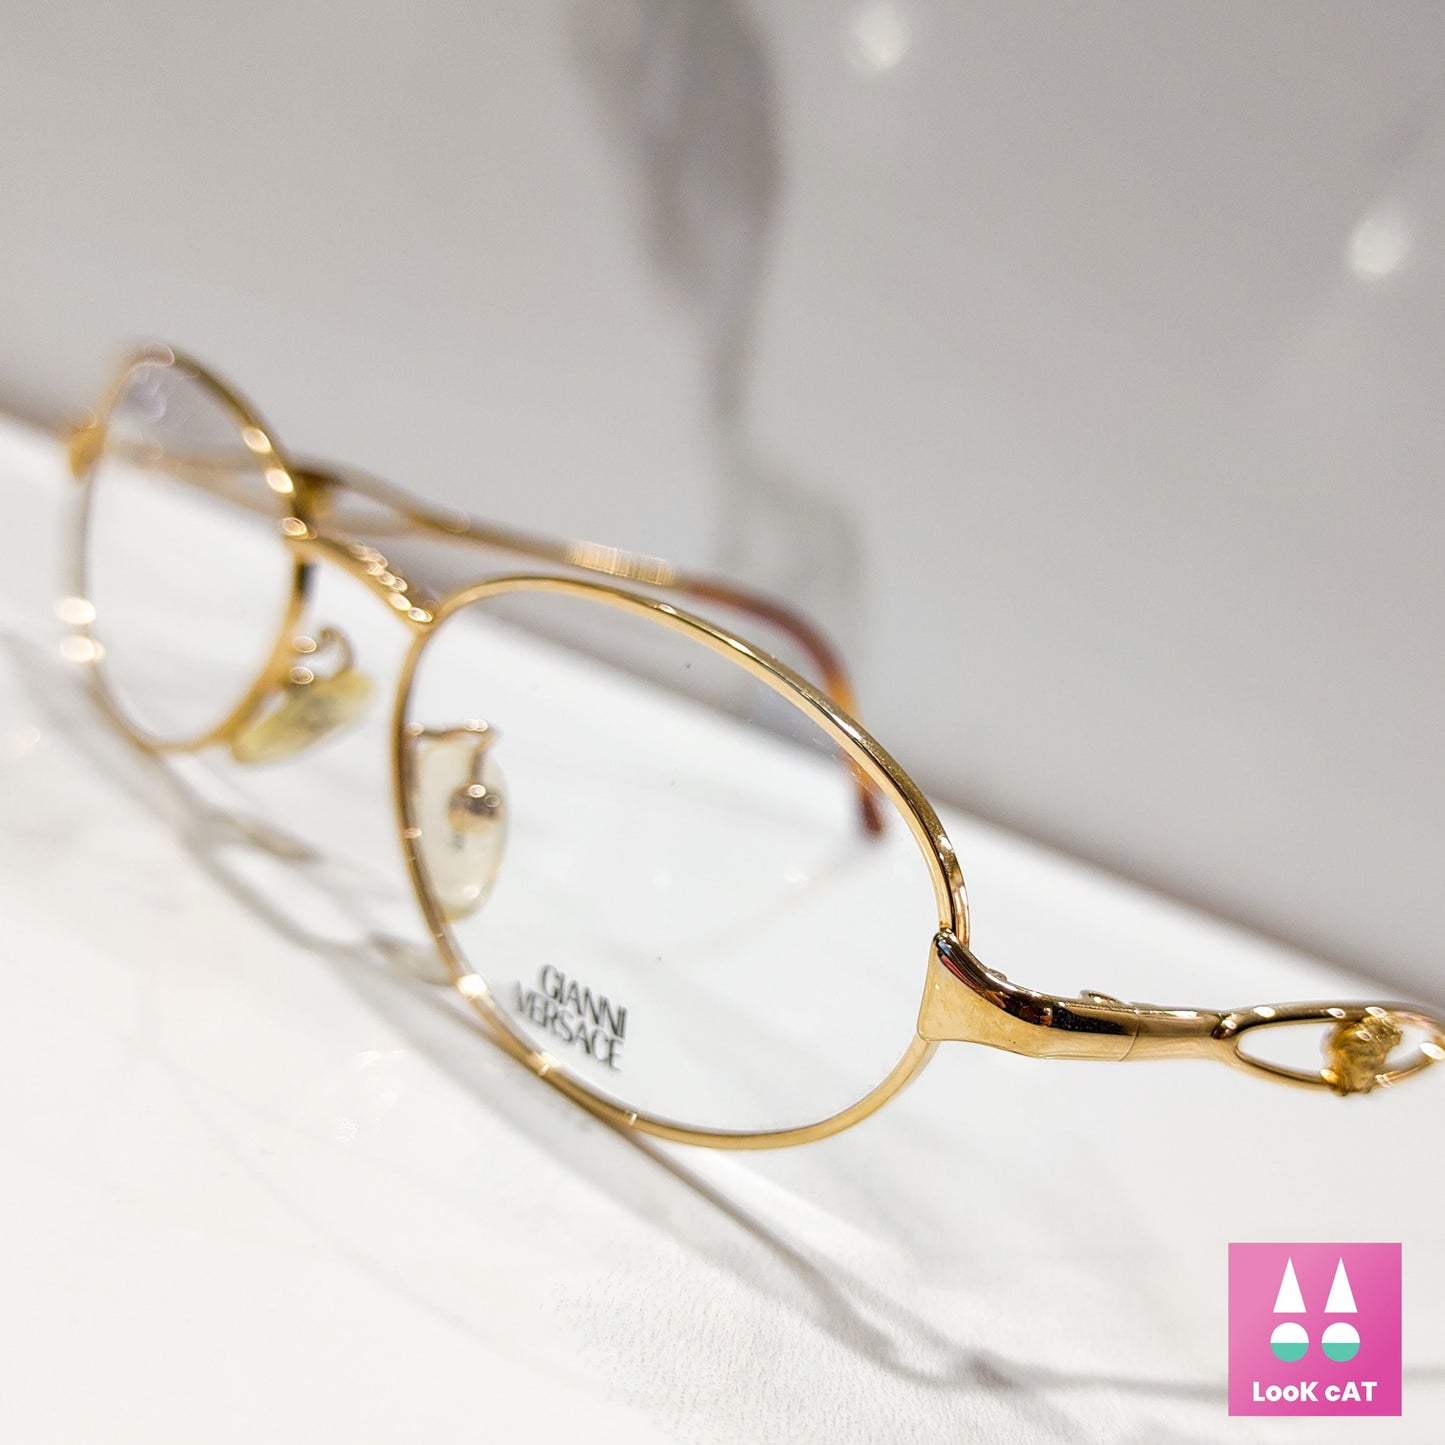 Versace G 83 occhiali da vista vintage Montatura color oro occhiali gafas anni '90 y2k NOS